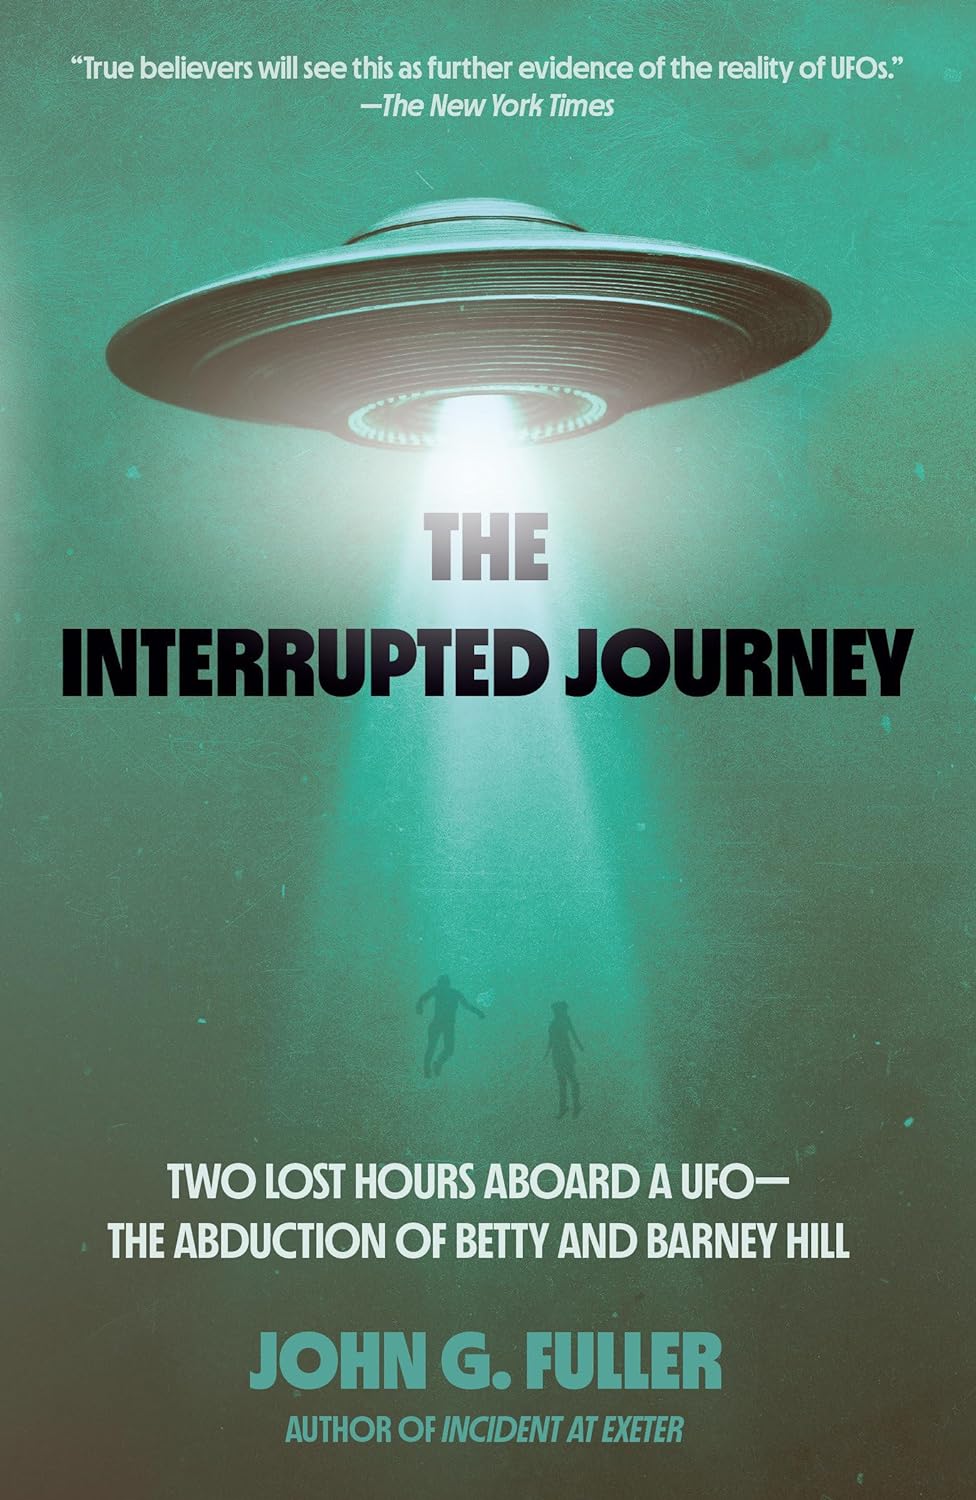 "The Interrupted Journey" by John G. Fuller